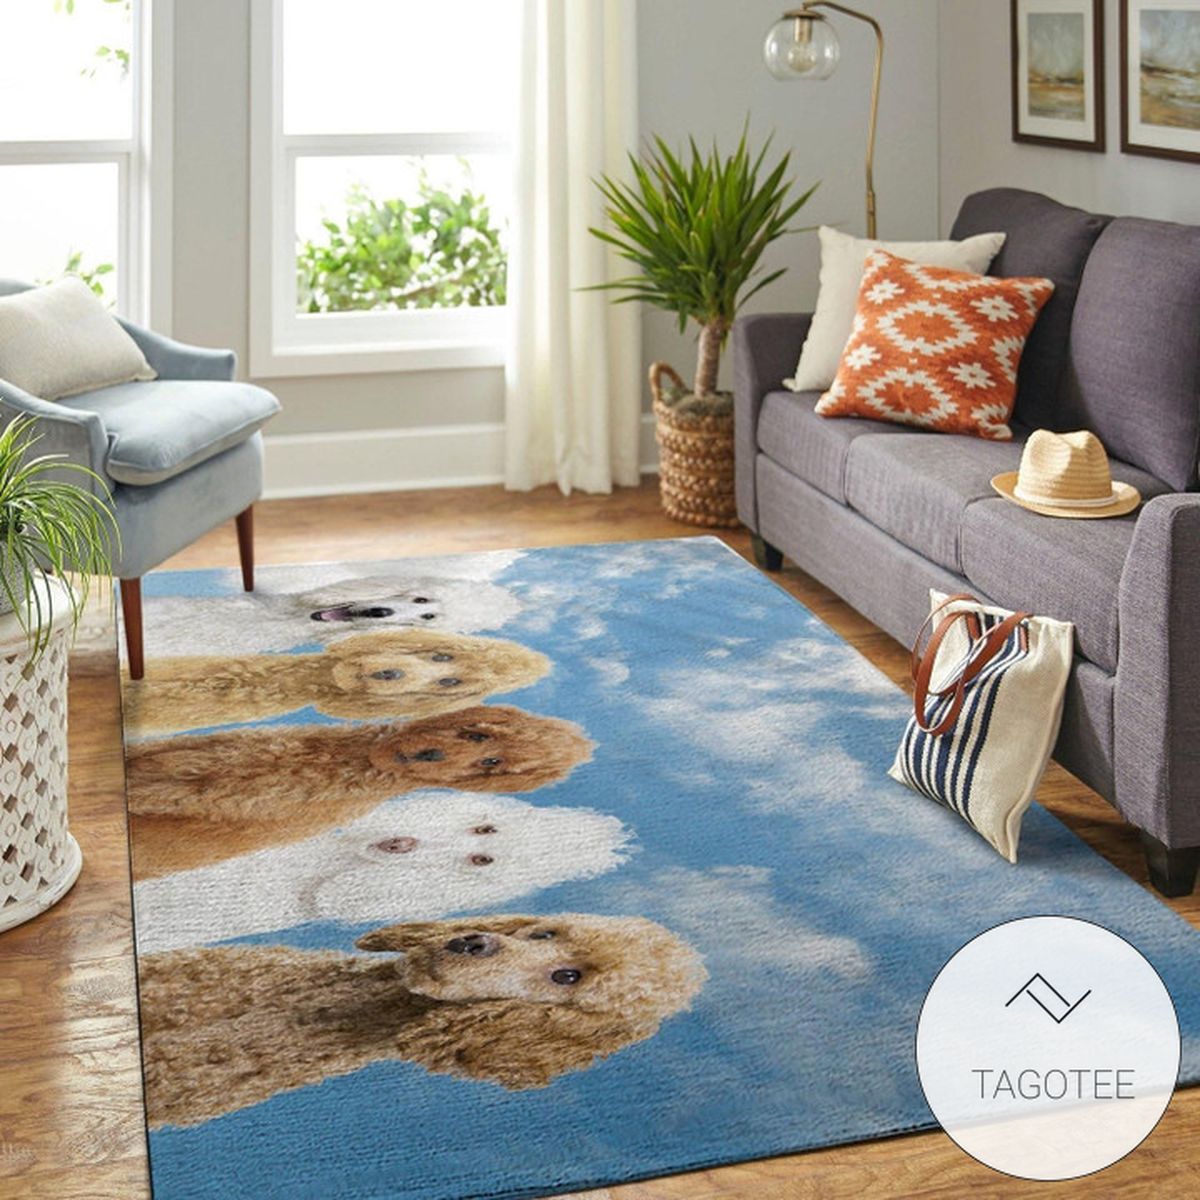 Poodle Rug Room Carpet Sport Custom Area Floor Home Decor